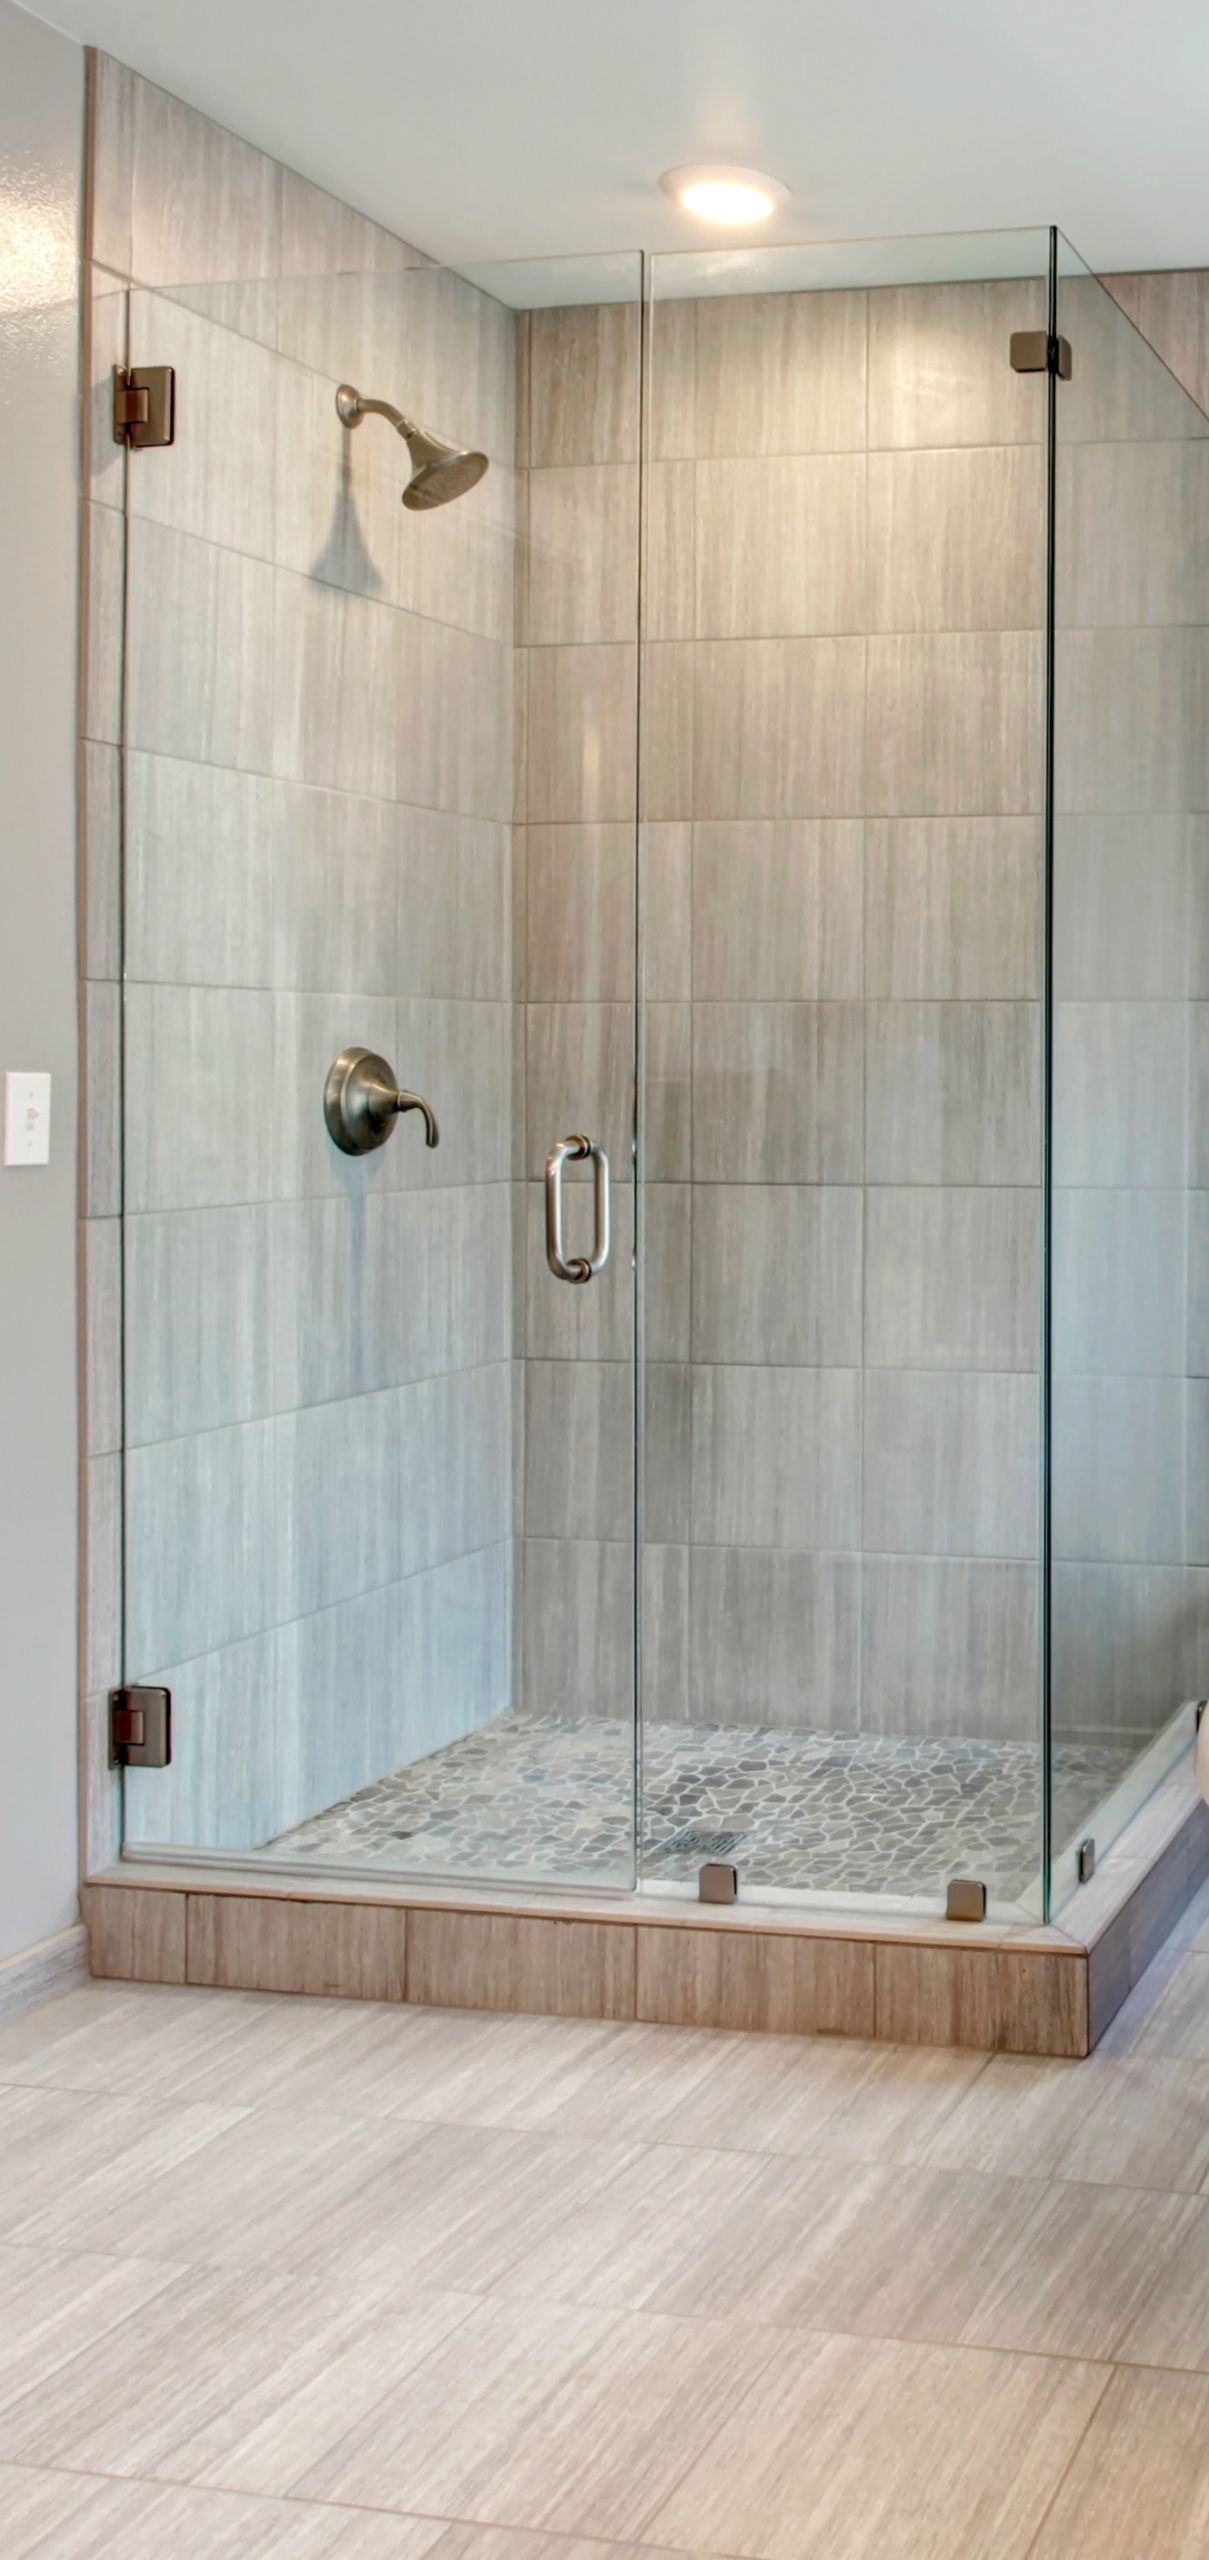 Bathroom Shower Stall Ideas
 Bathroom Interesting Small Shower Stalls With Fabulous